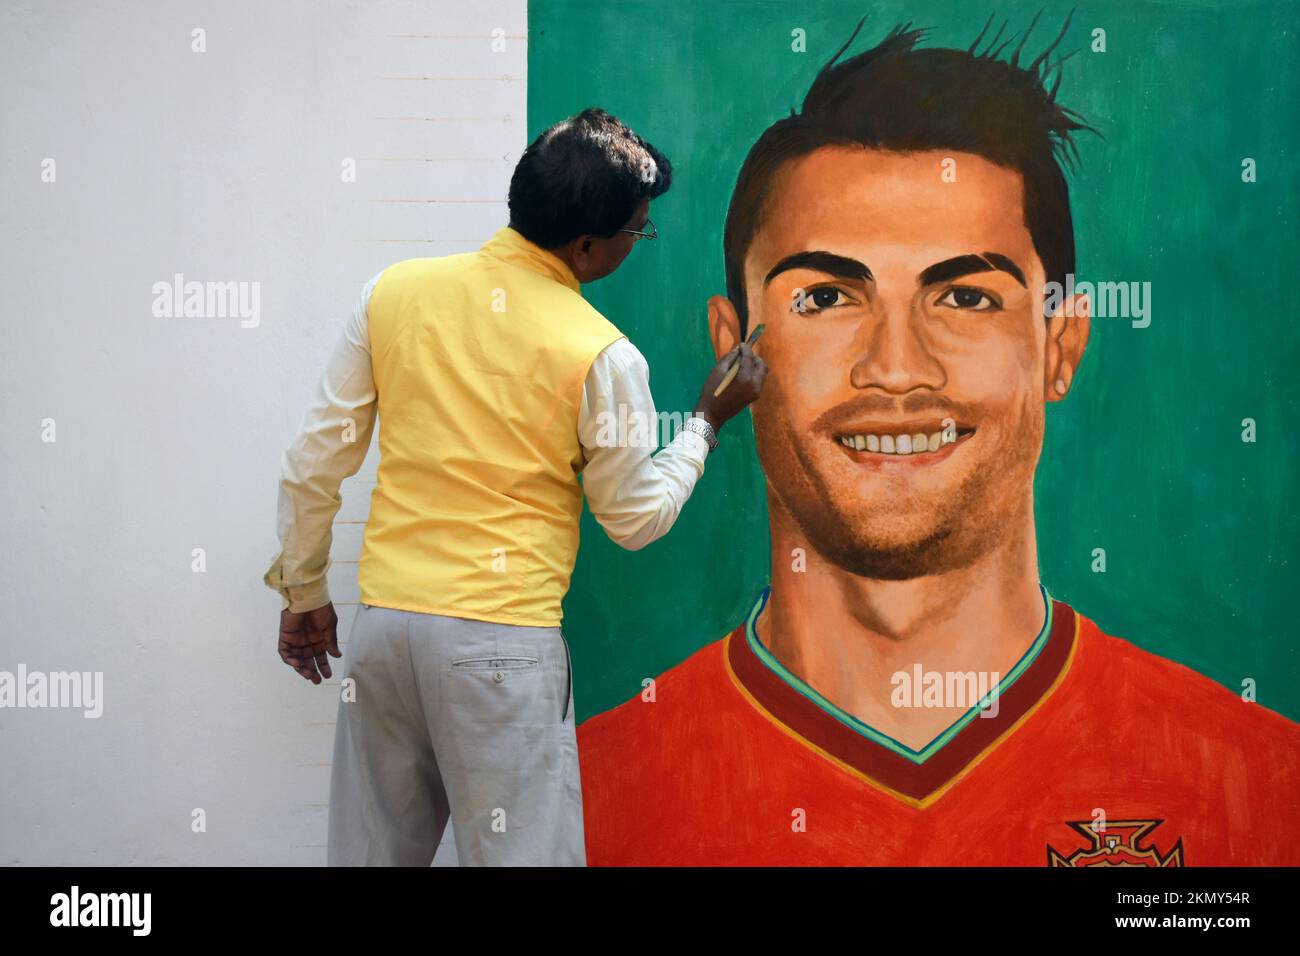 Ronaldo messi neymar hi-res stock photography and images - Alamy